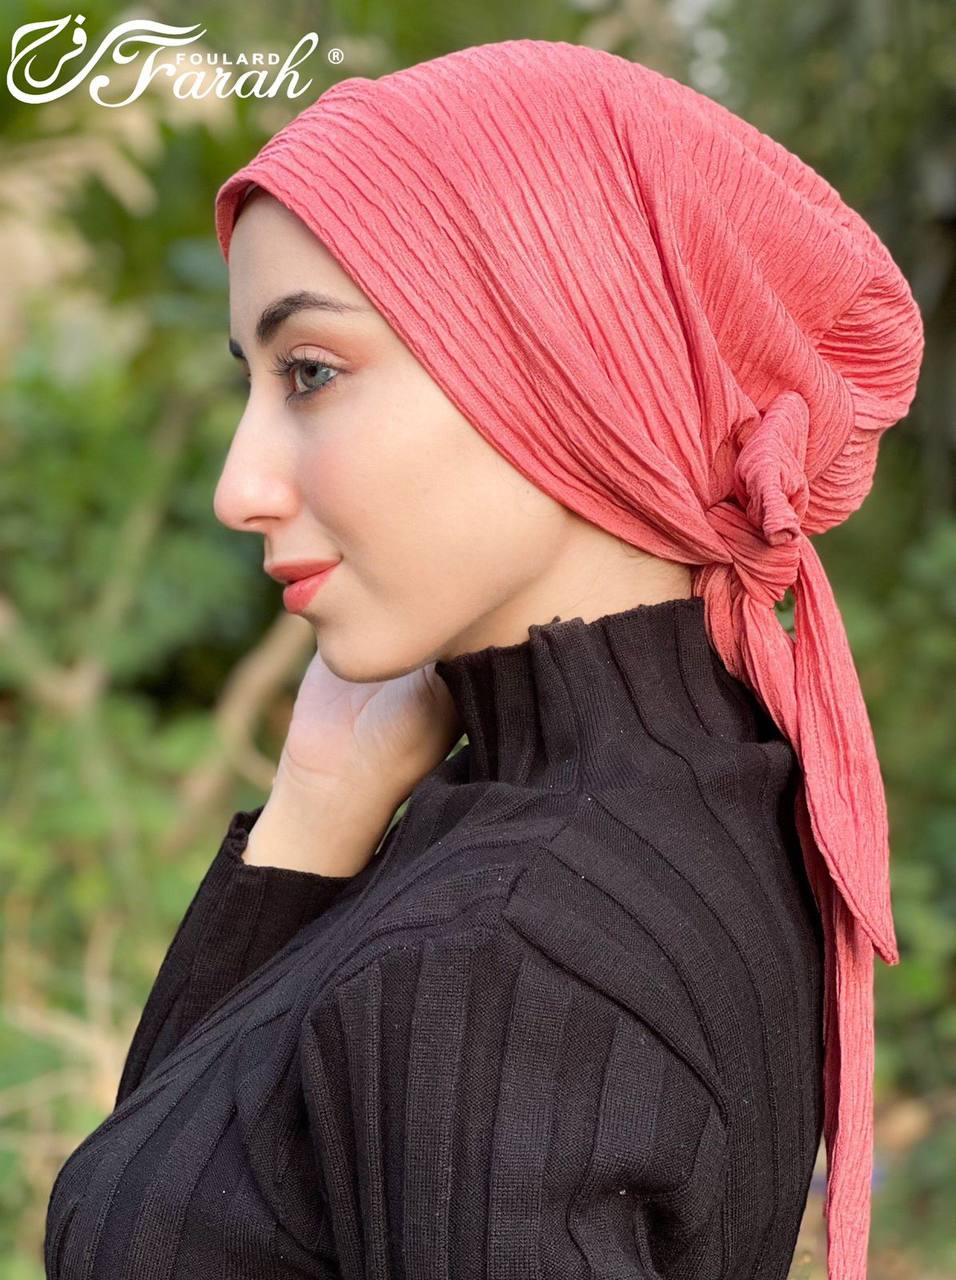 Elegant Pleated Turban Hijab - Stylish Headwrap for Modest Fashion - Rose Pink